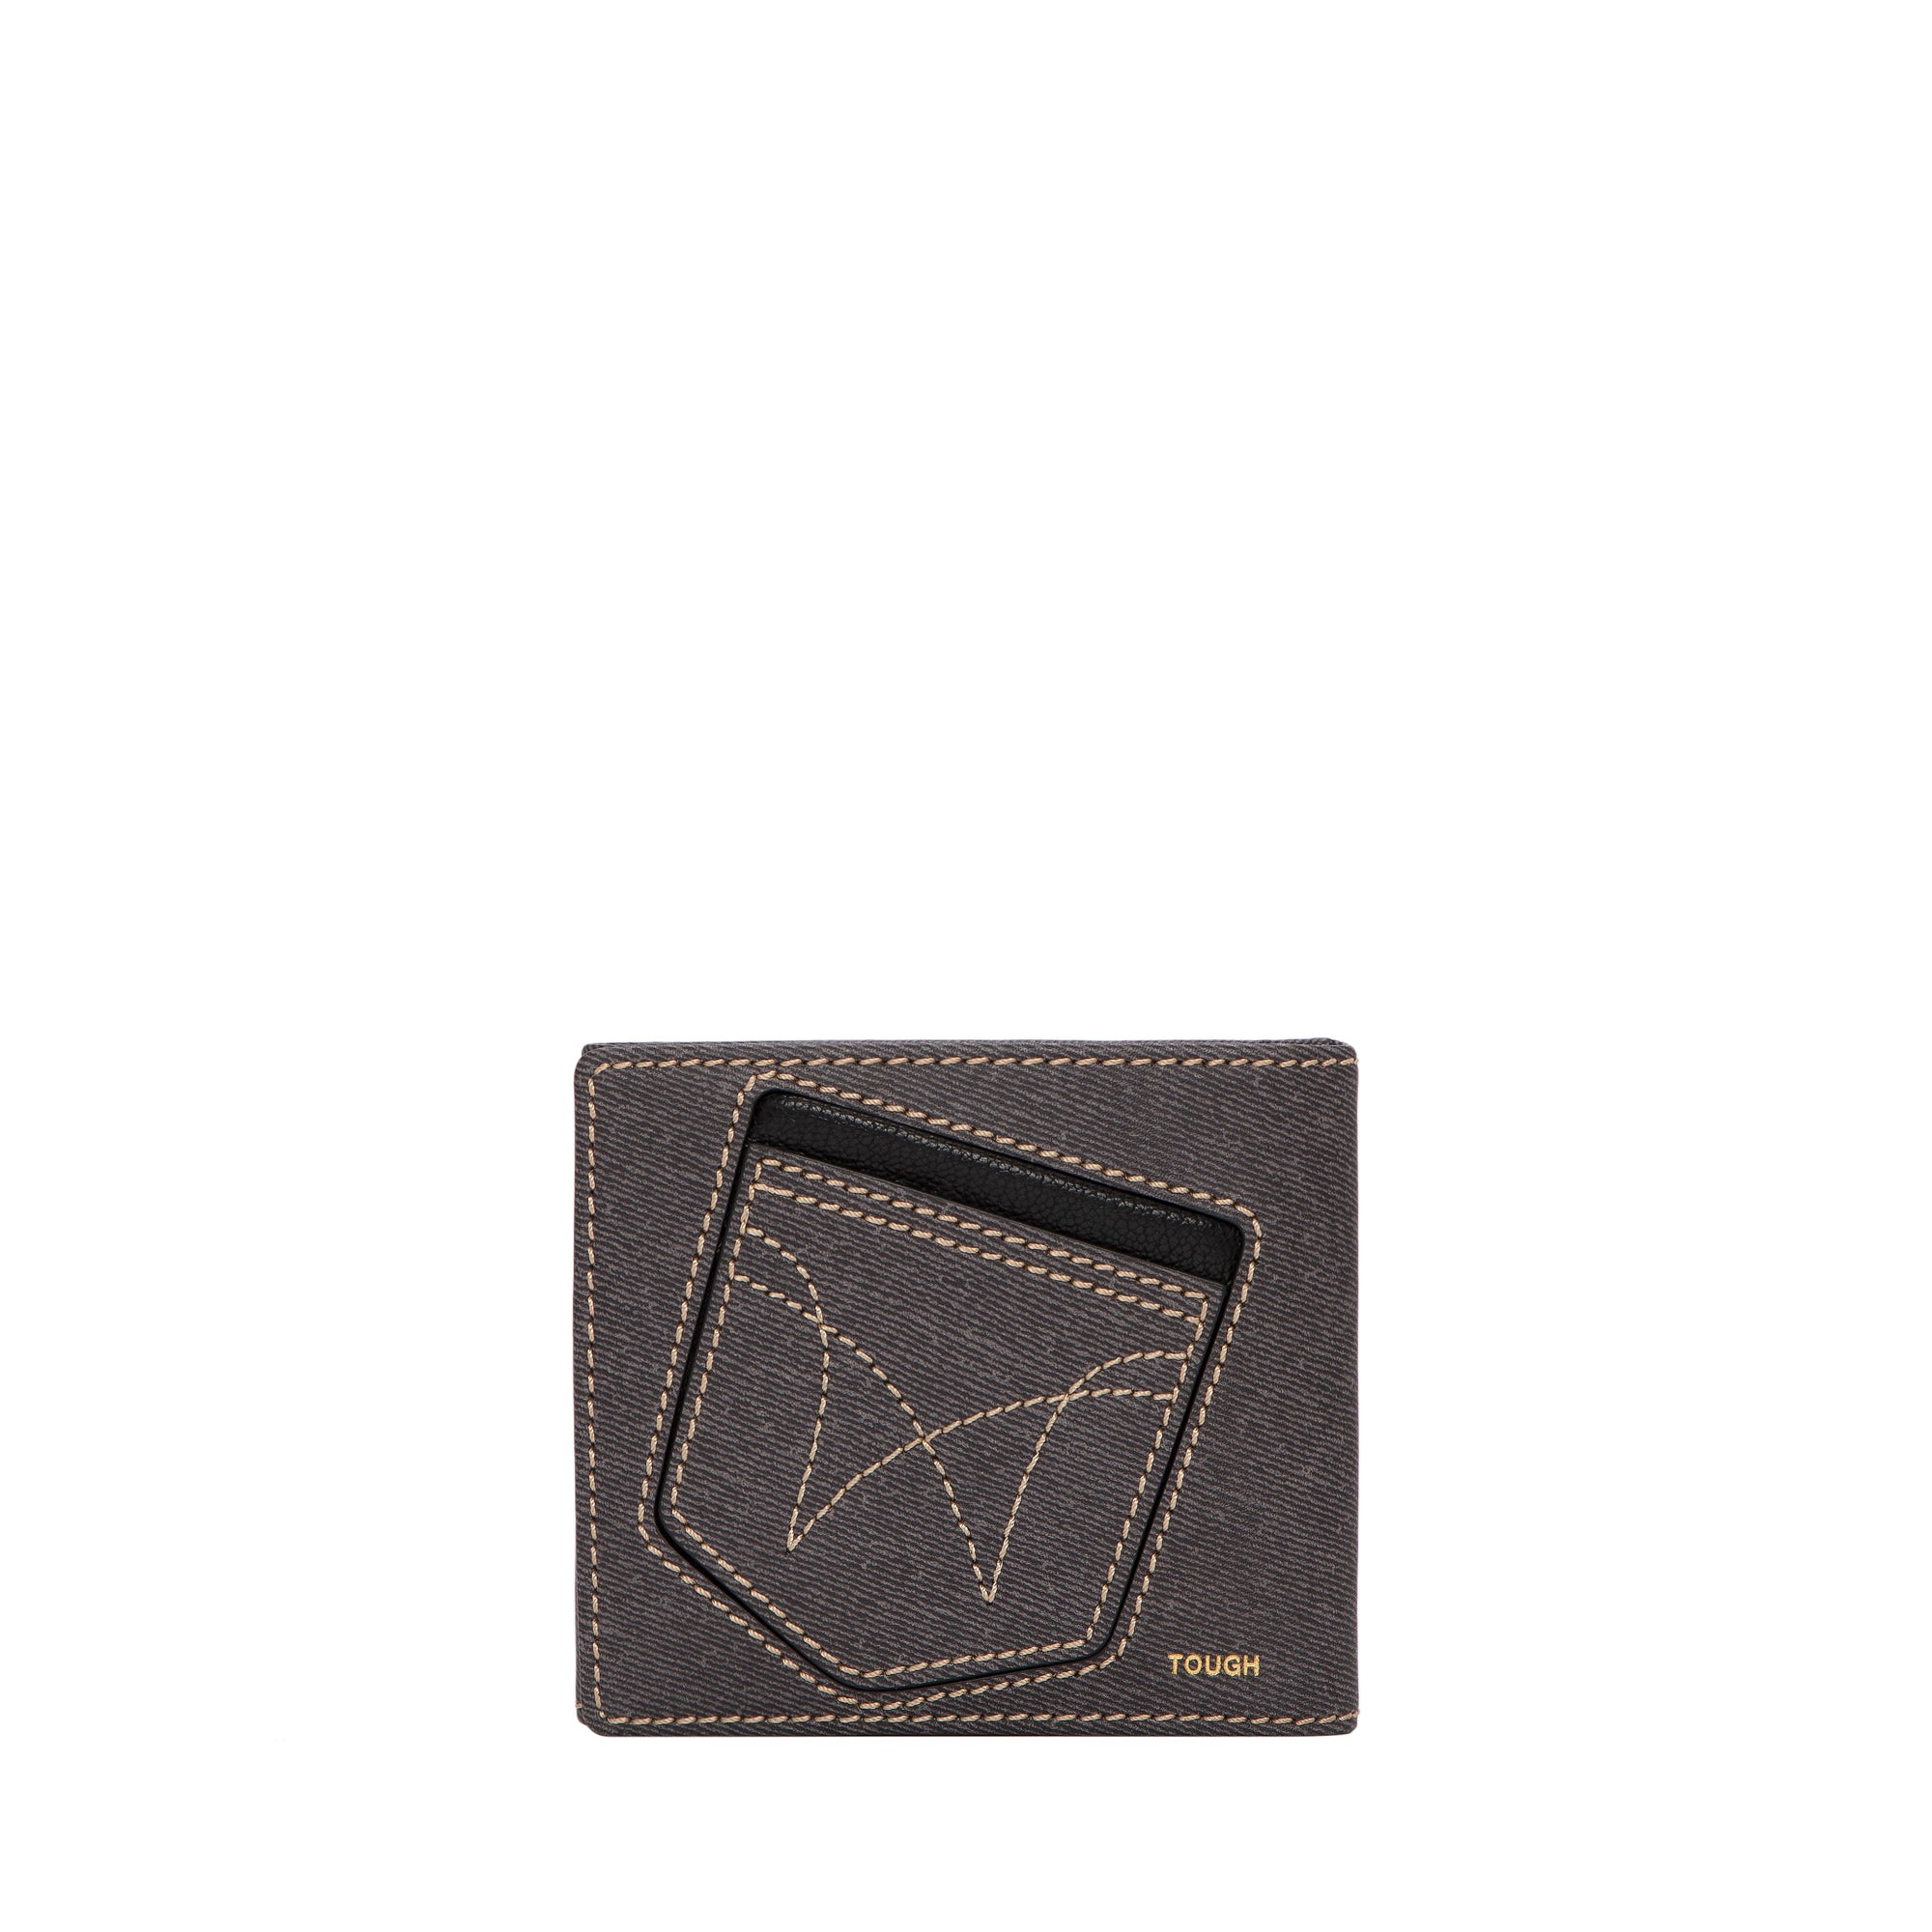 TOUGH JEANSMITH Pocket short wallet #TW122-001